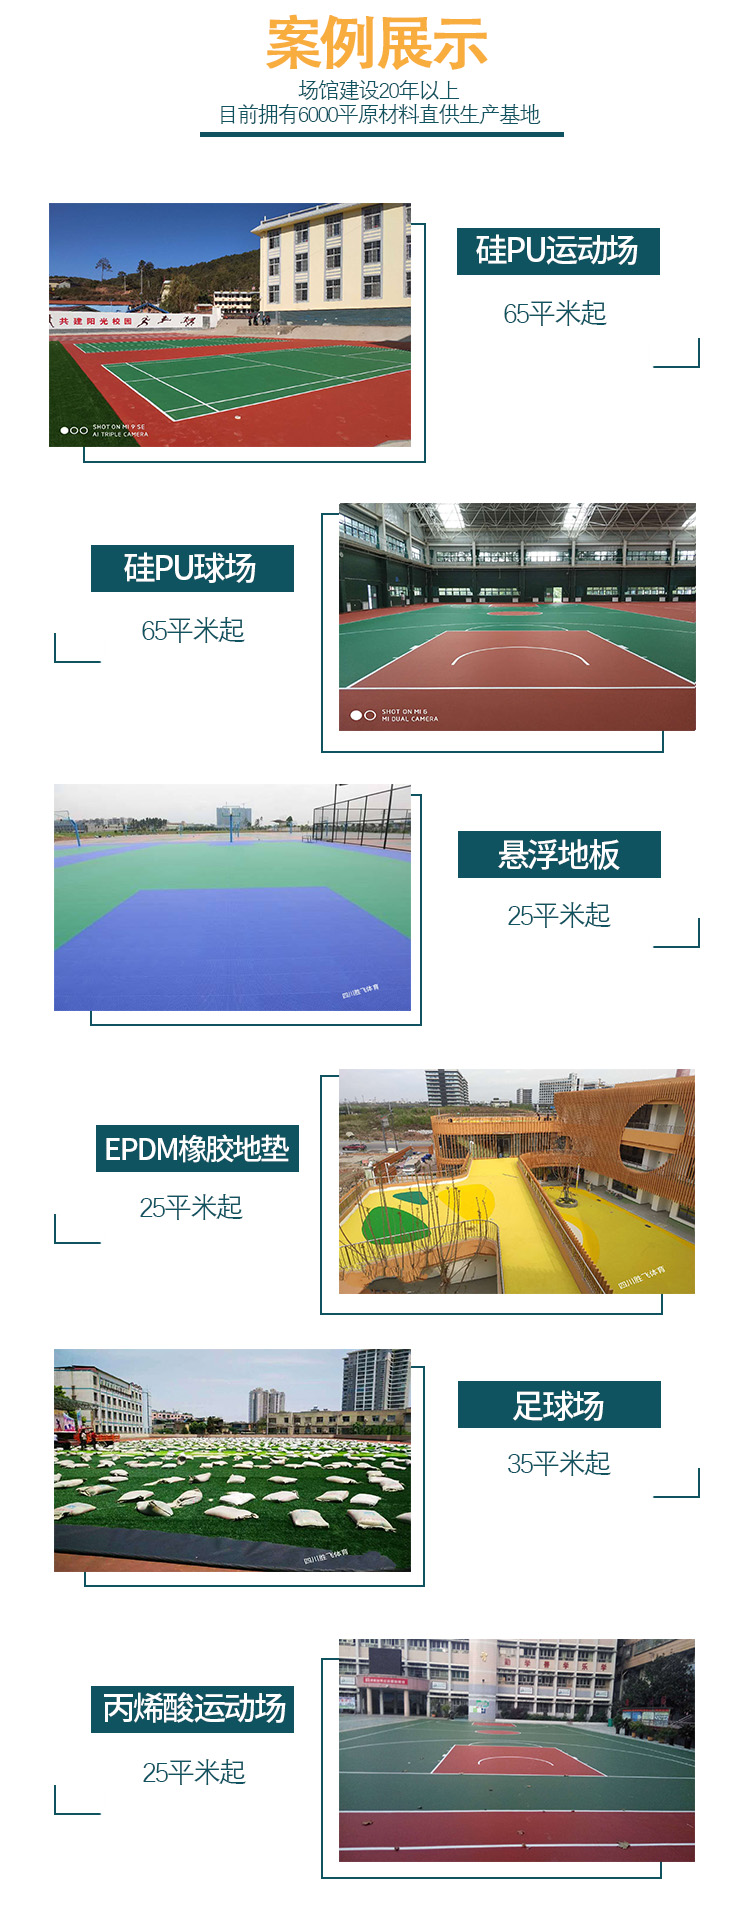 Community plastic road, running track, children's playground, plastic safety mat, EPDM rubber runway, Shengfei